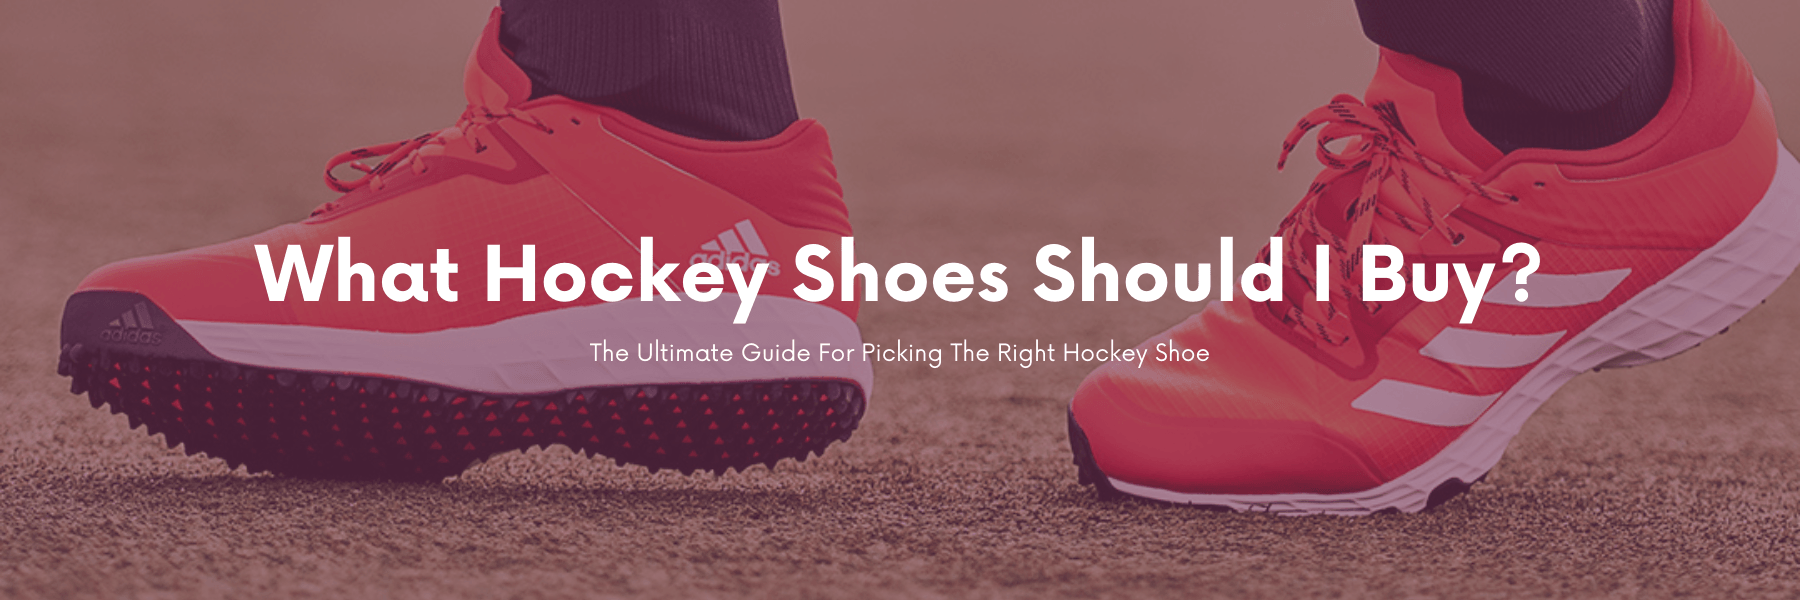 What Hockey Shoe Should I Buy? - Total Hockey